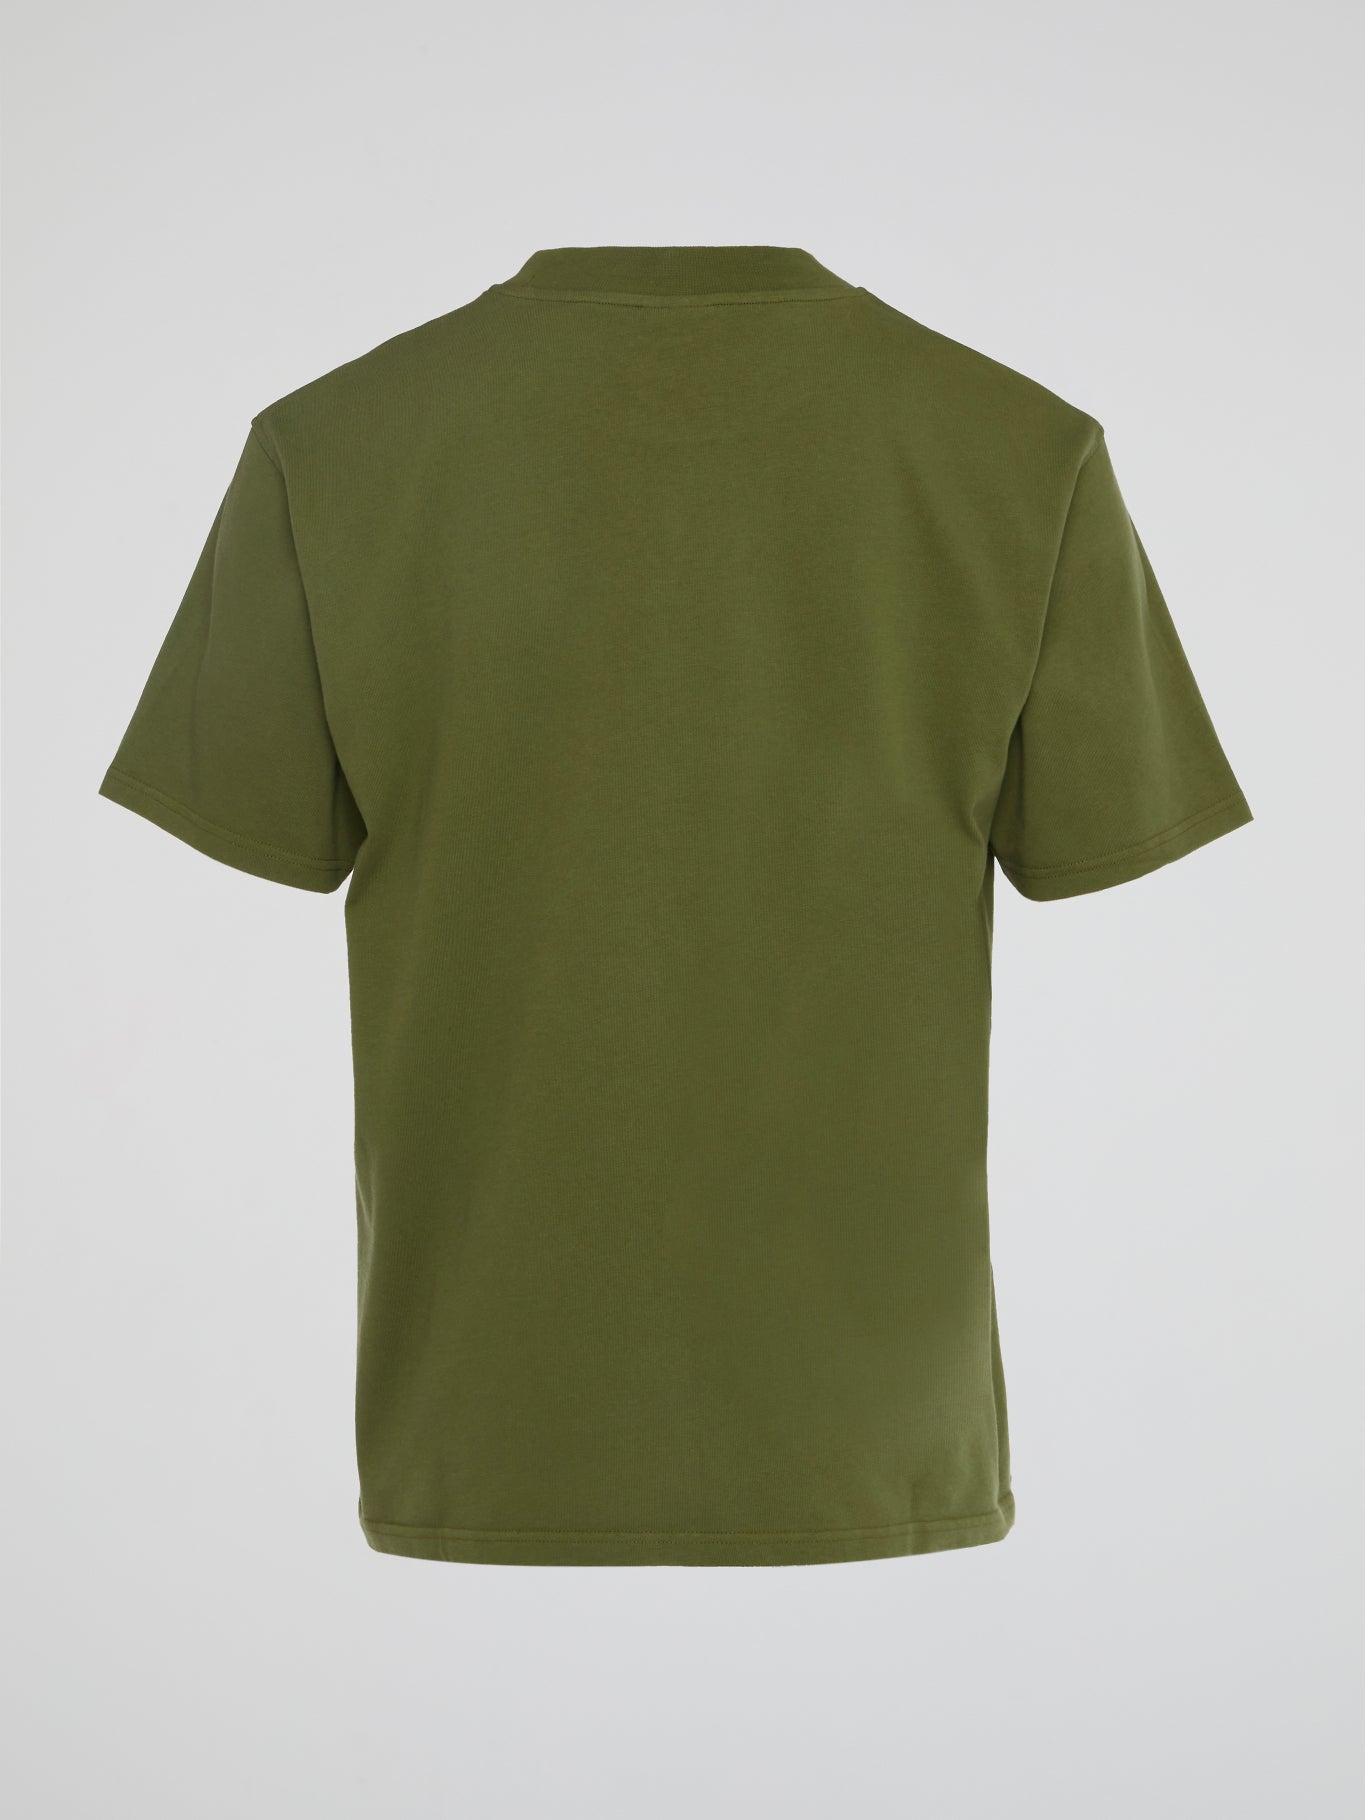 Gunther x Inkorrect Khaki T-Shirt